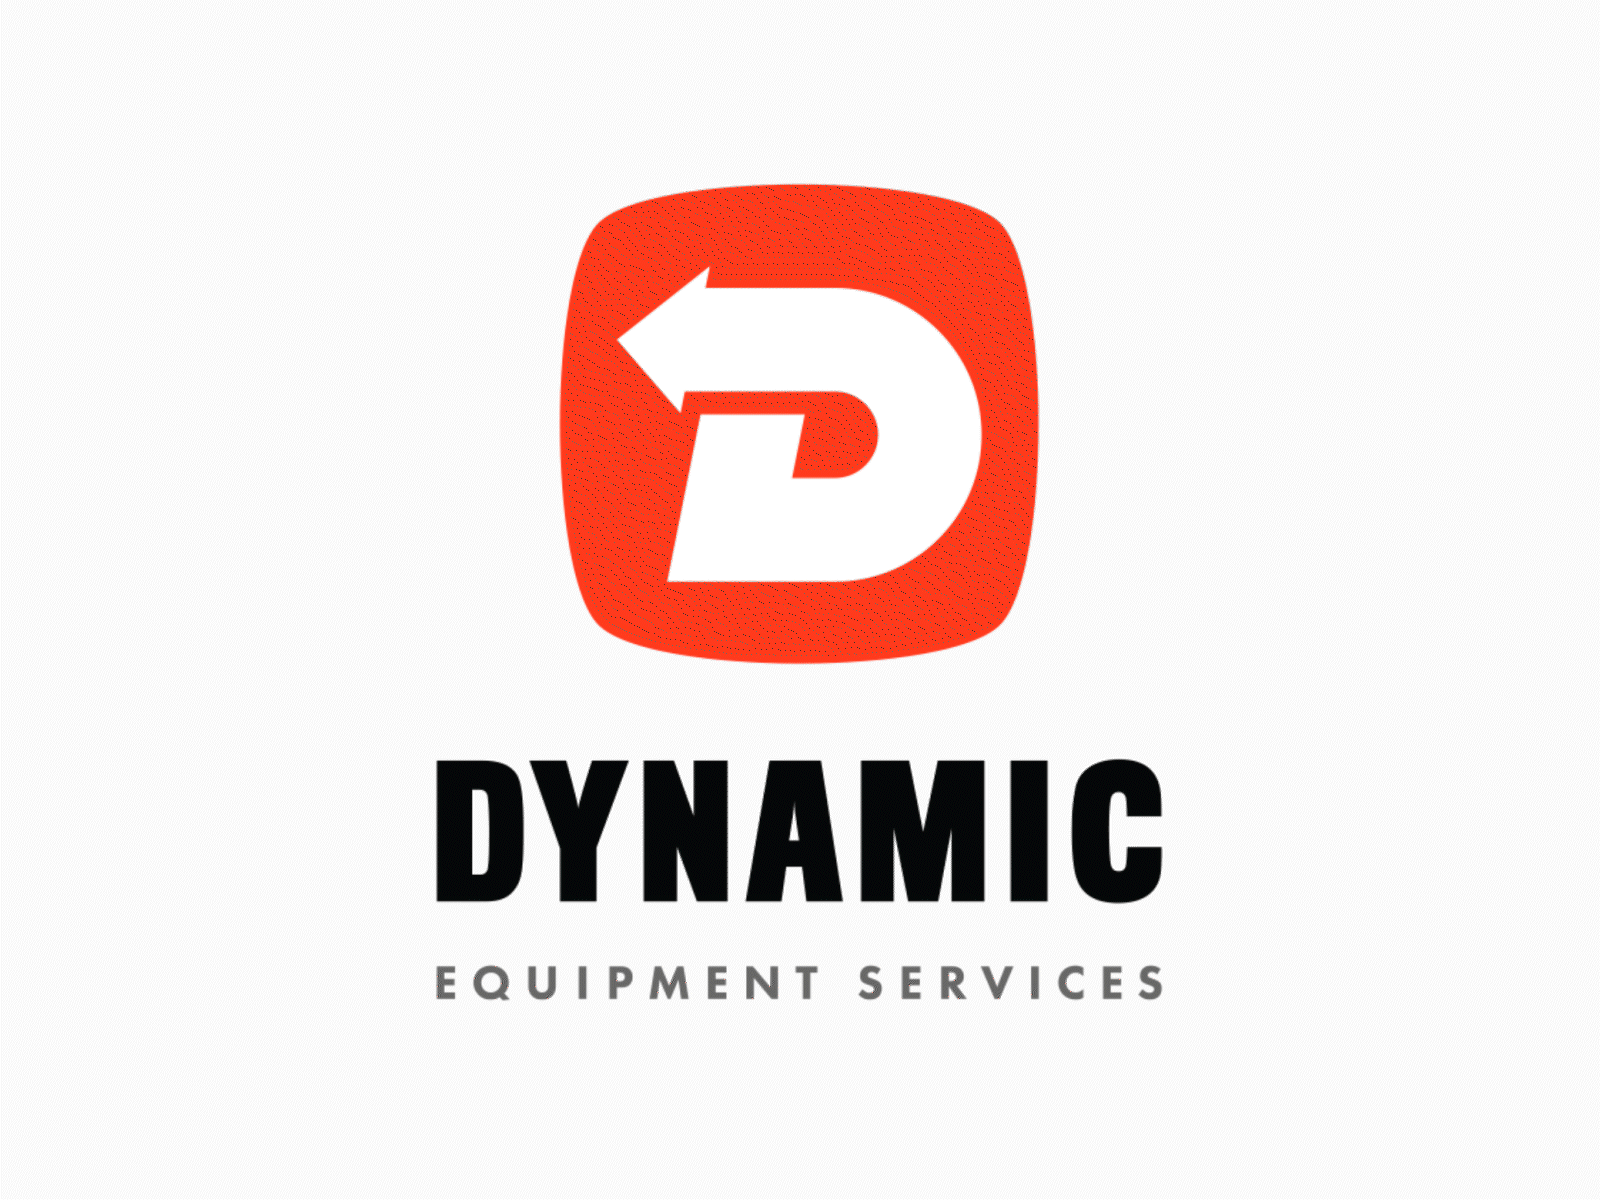 Dynamic Equipment Services: Brand Identity - Logo